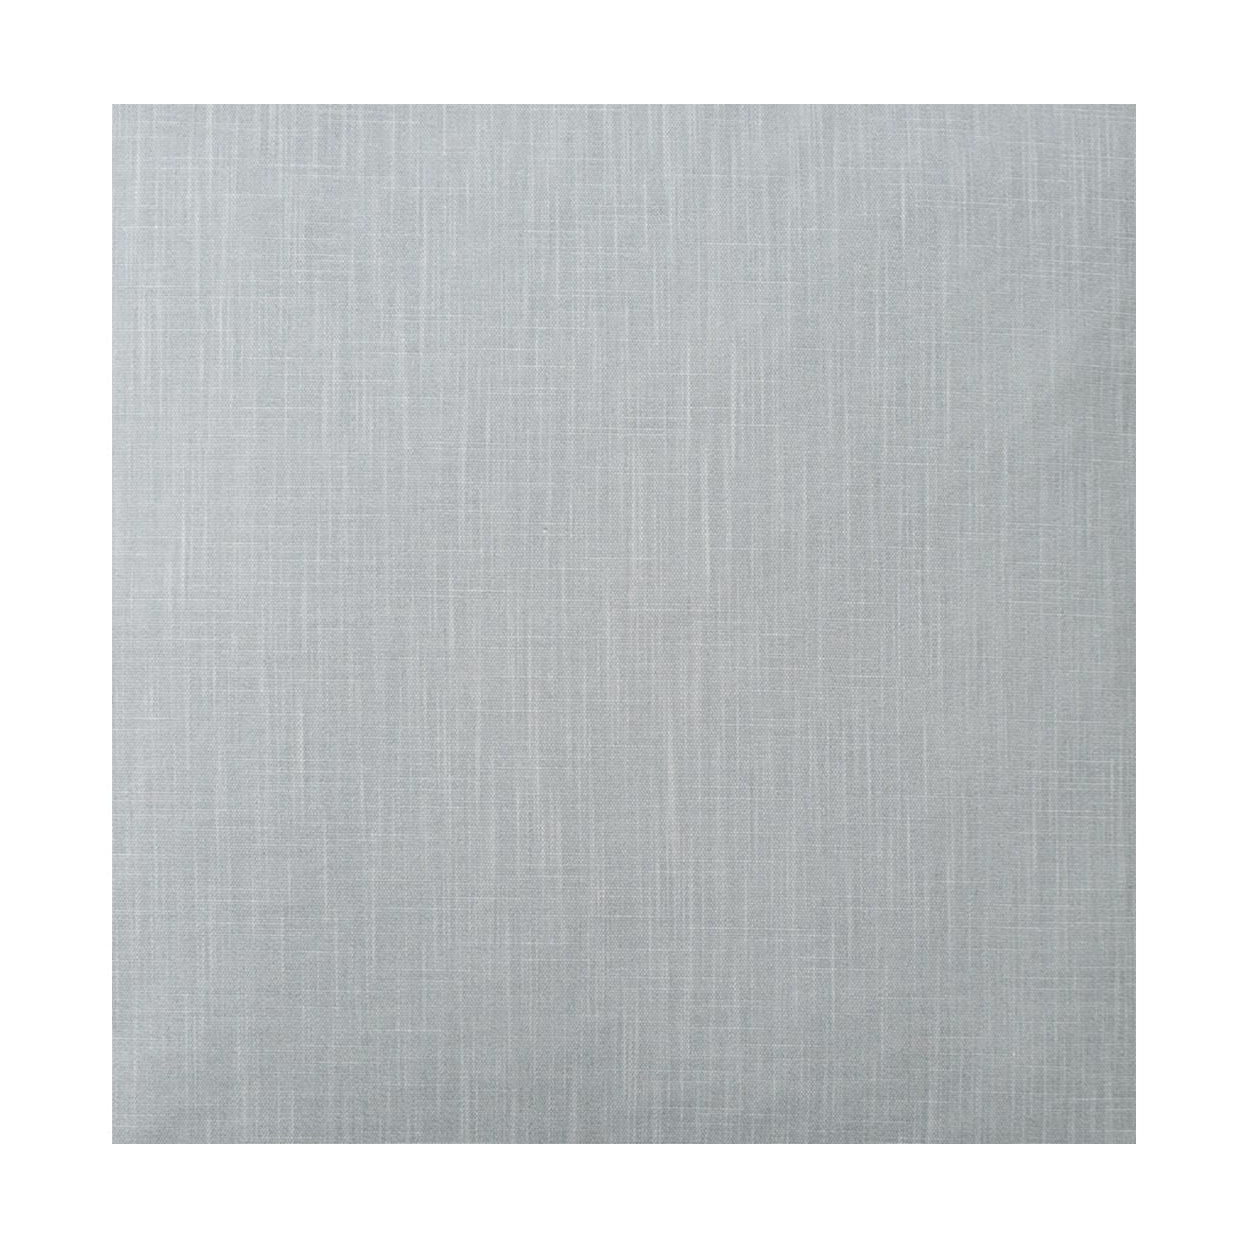 Spira klotz ancho de tela 150 cm (precio por metro), azul de humo ligero